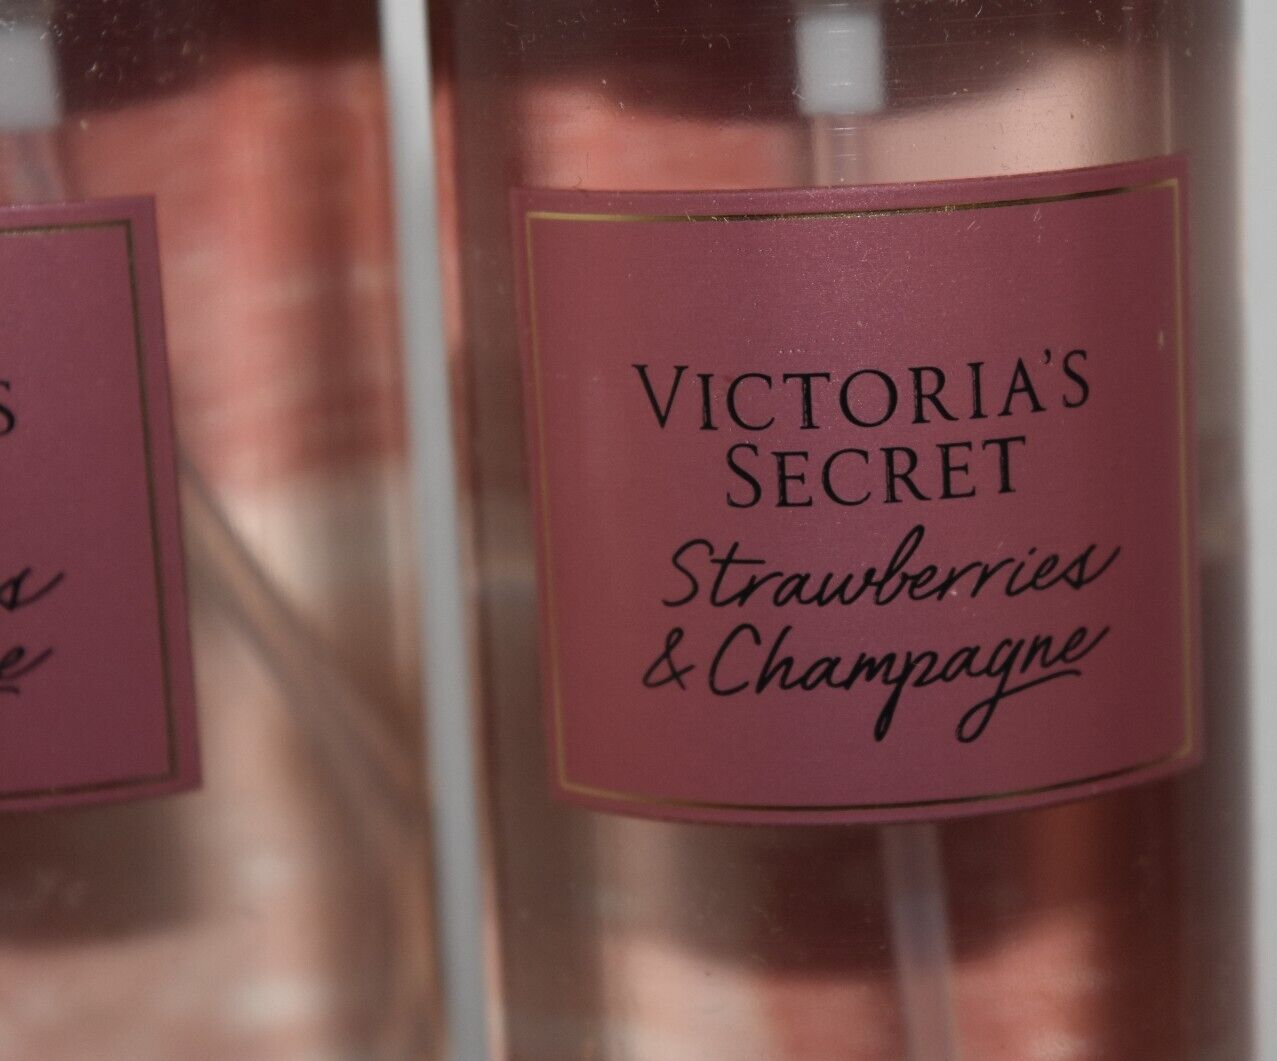 2 New Victoria's Secret Strawberries & Champagne Body Mist Lot Free Shipping VICTORIA'S SECRET 26546829 - фотография #9